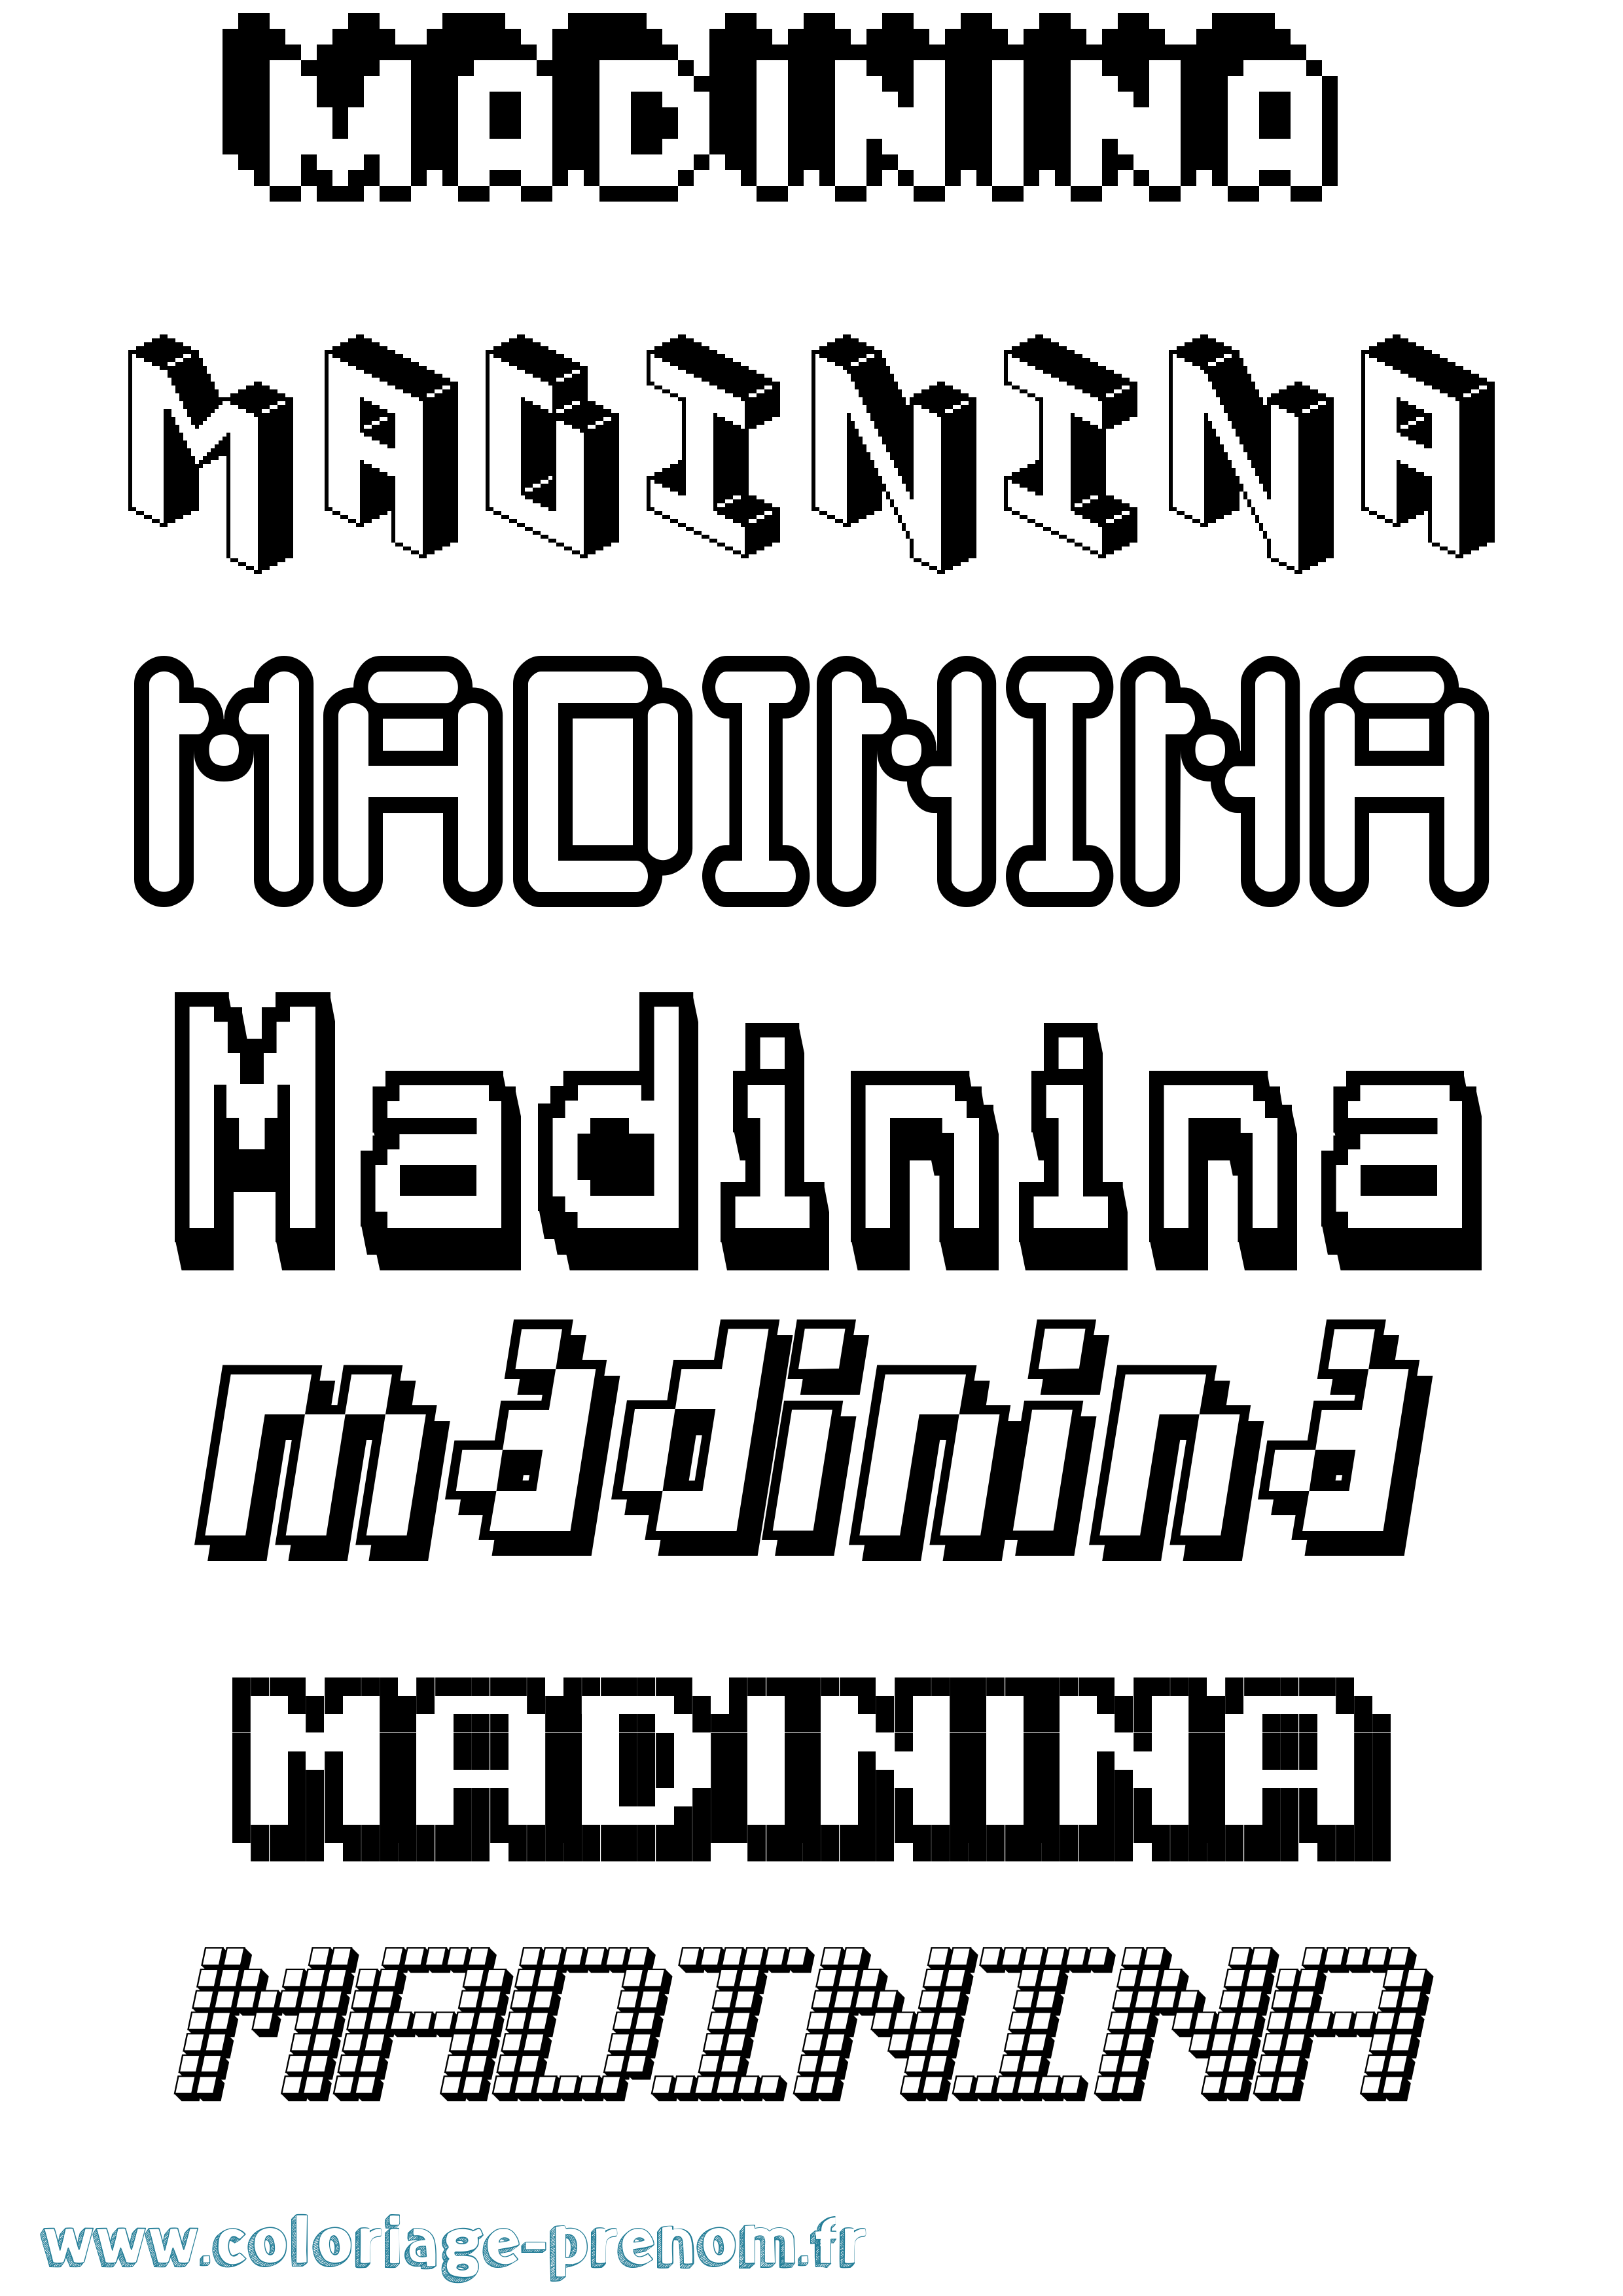 Coloriage prénom Madinina Pixel